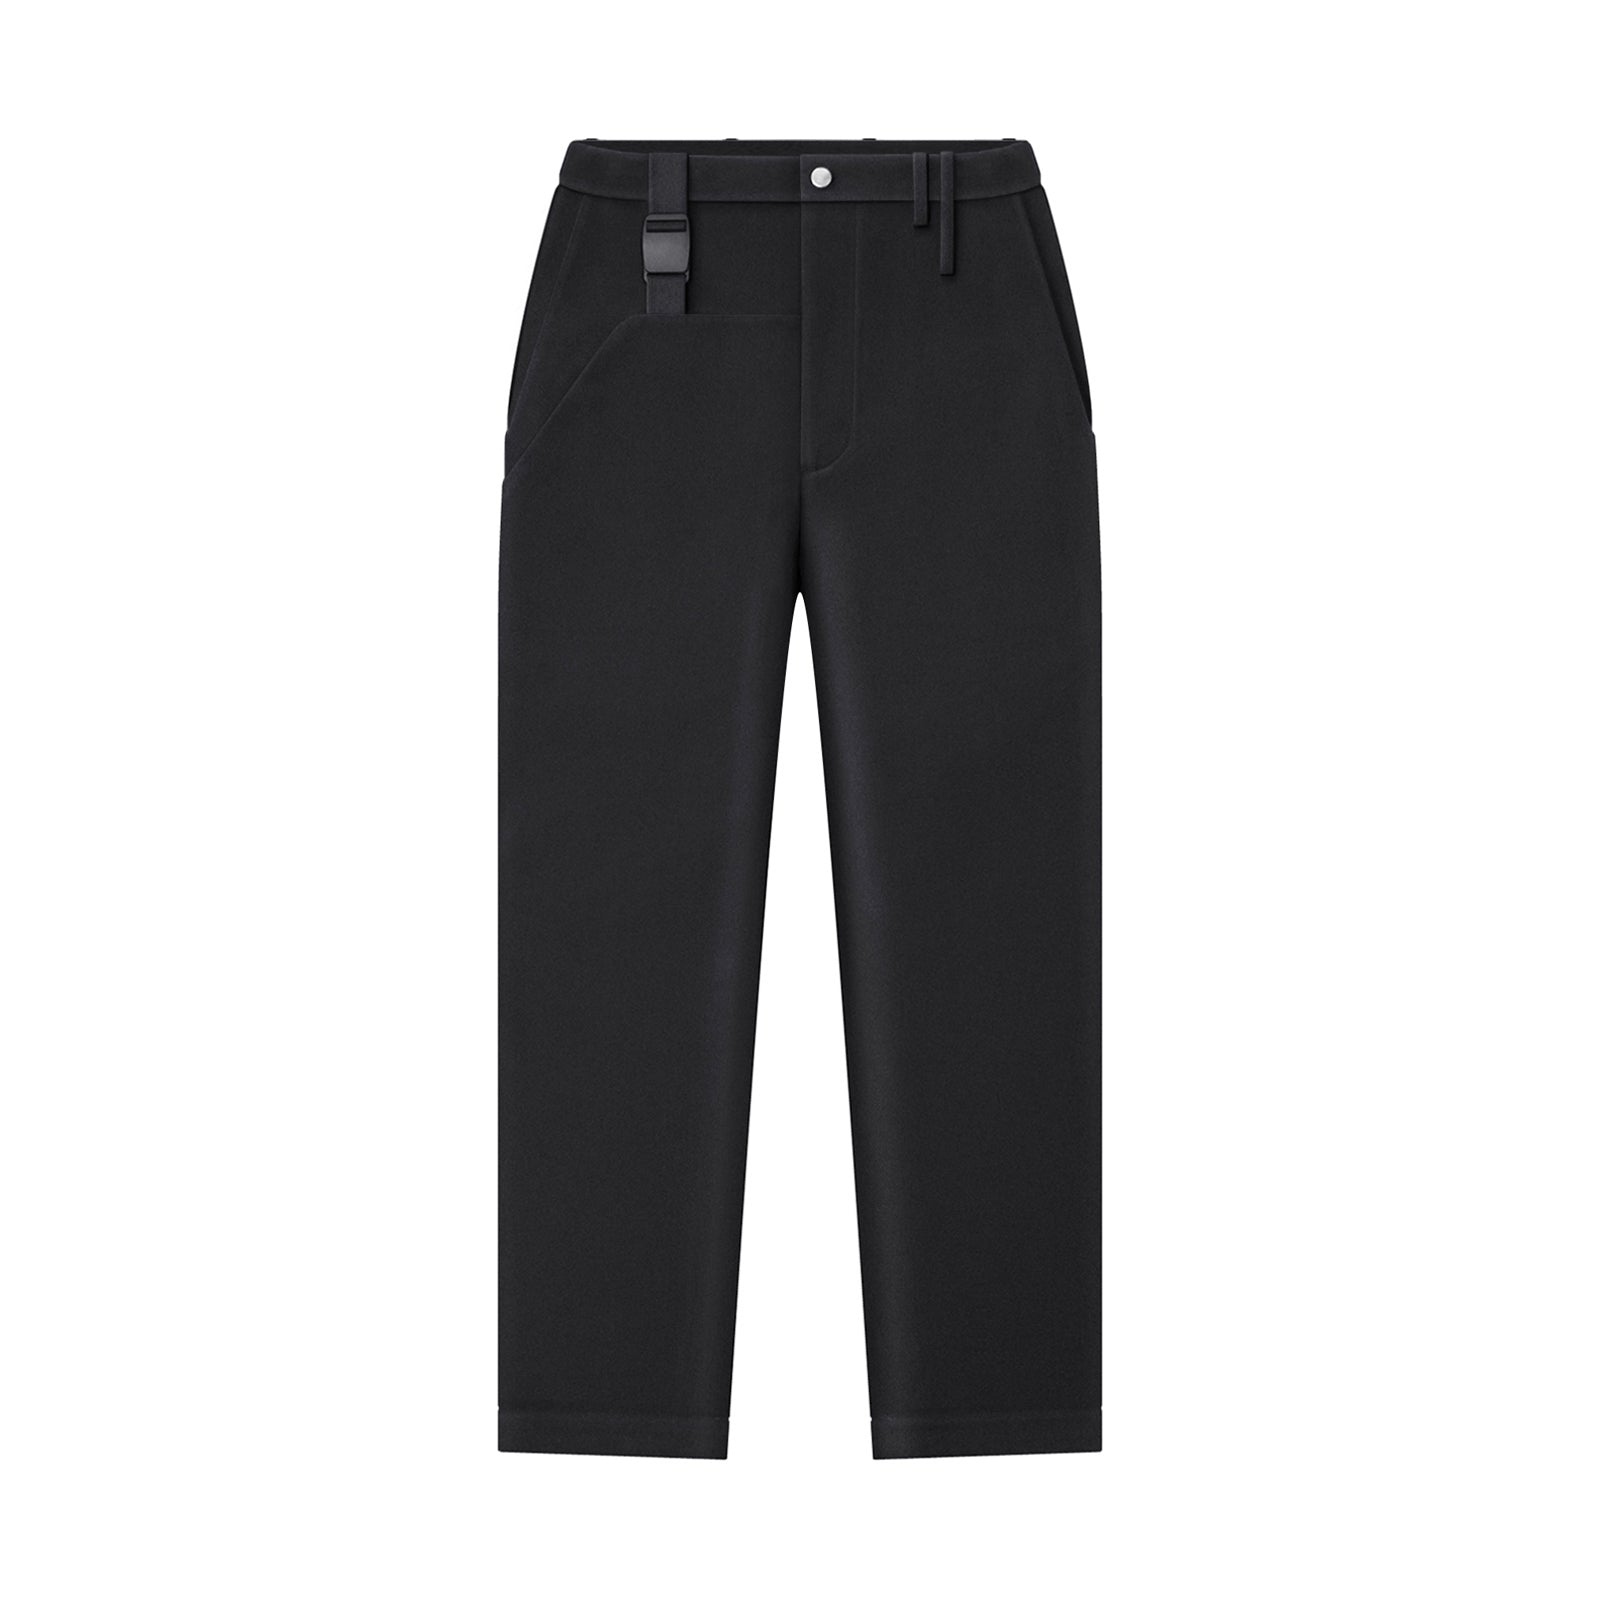 Clasp Pocket Pants [Black] - Nuboaix